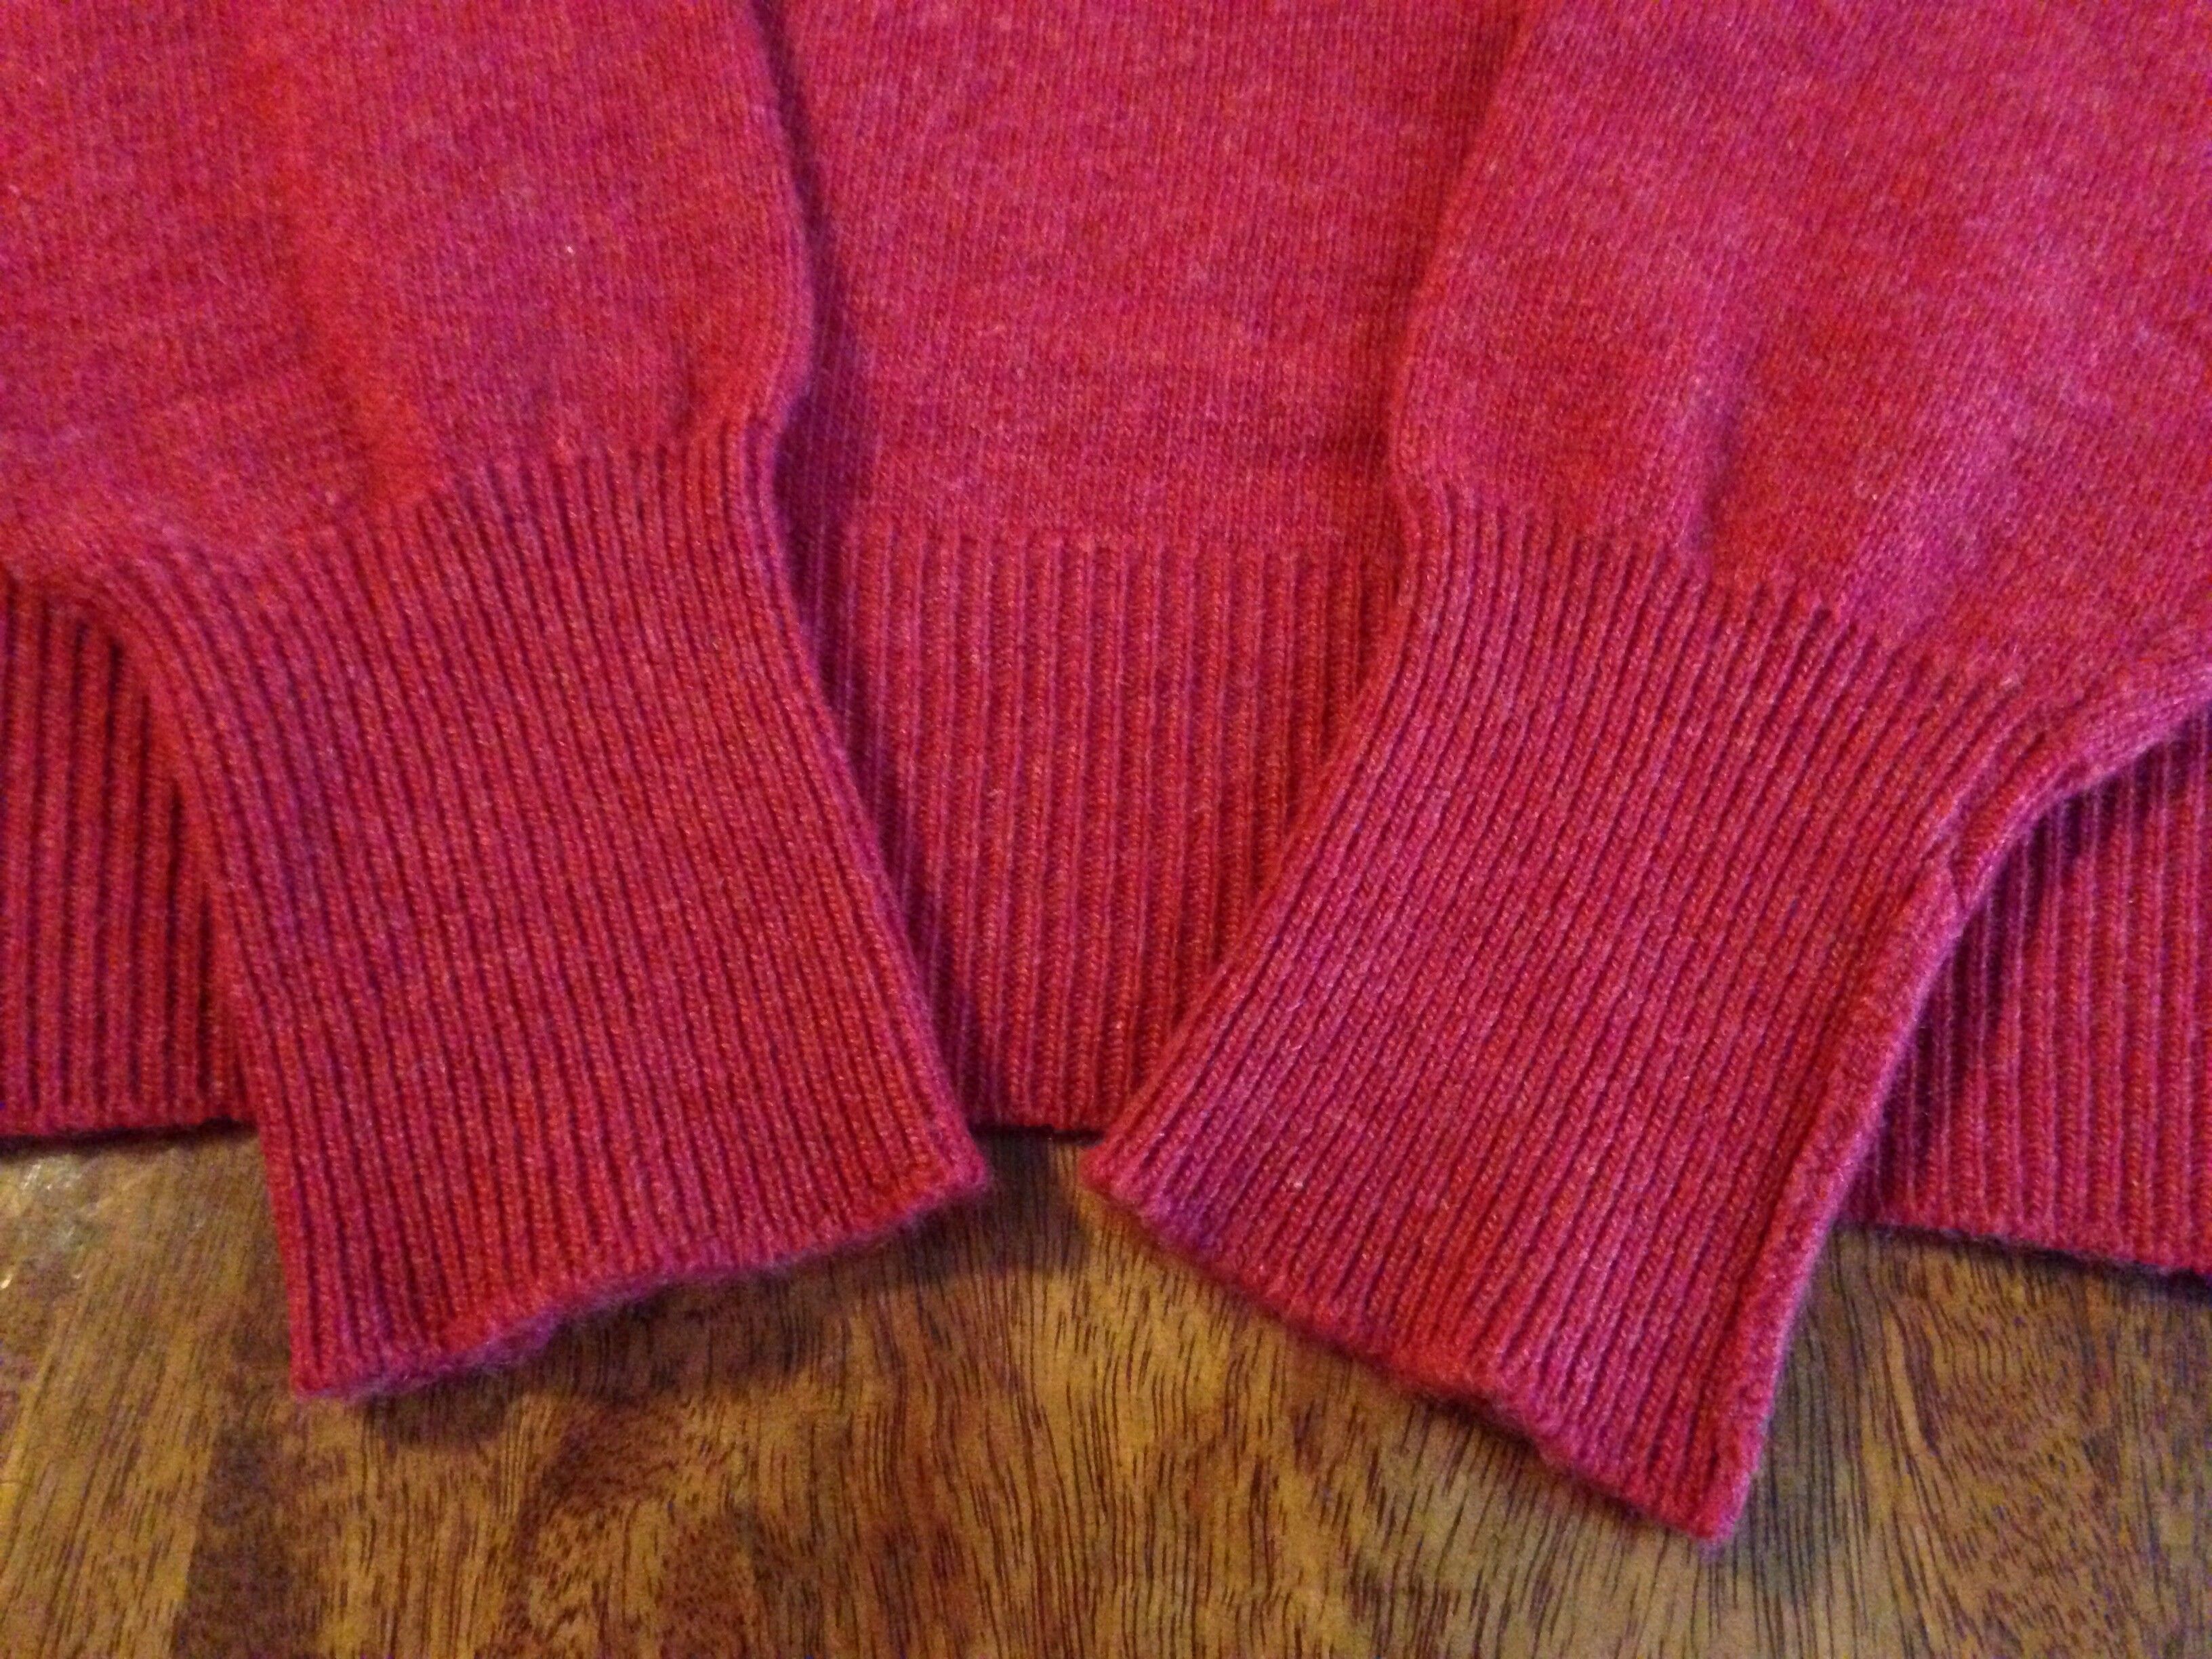 Turnbull & Asser Red Cashmere Sweater Size US L / EU 52-54 / 3 - 3 Thumbnail